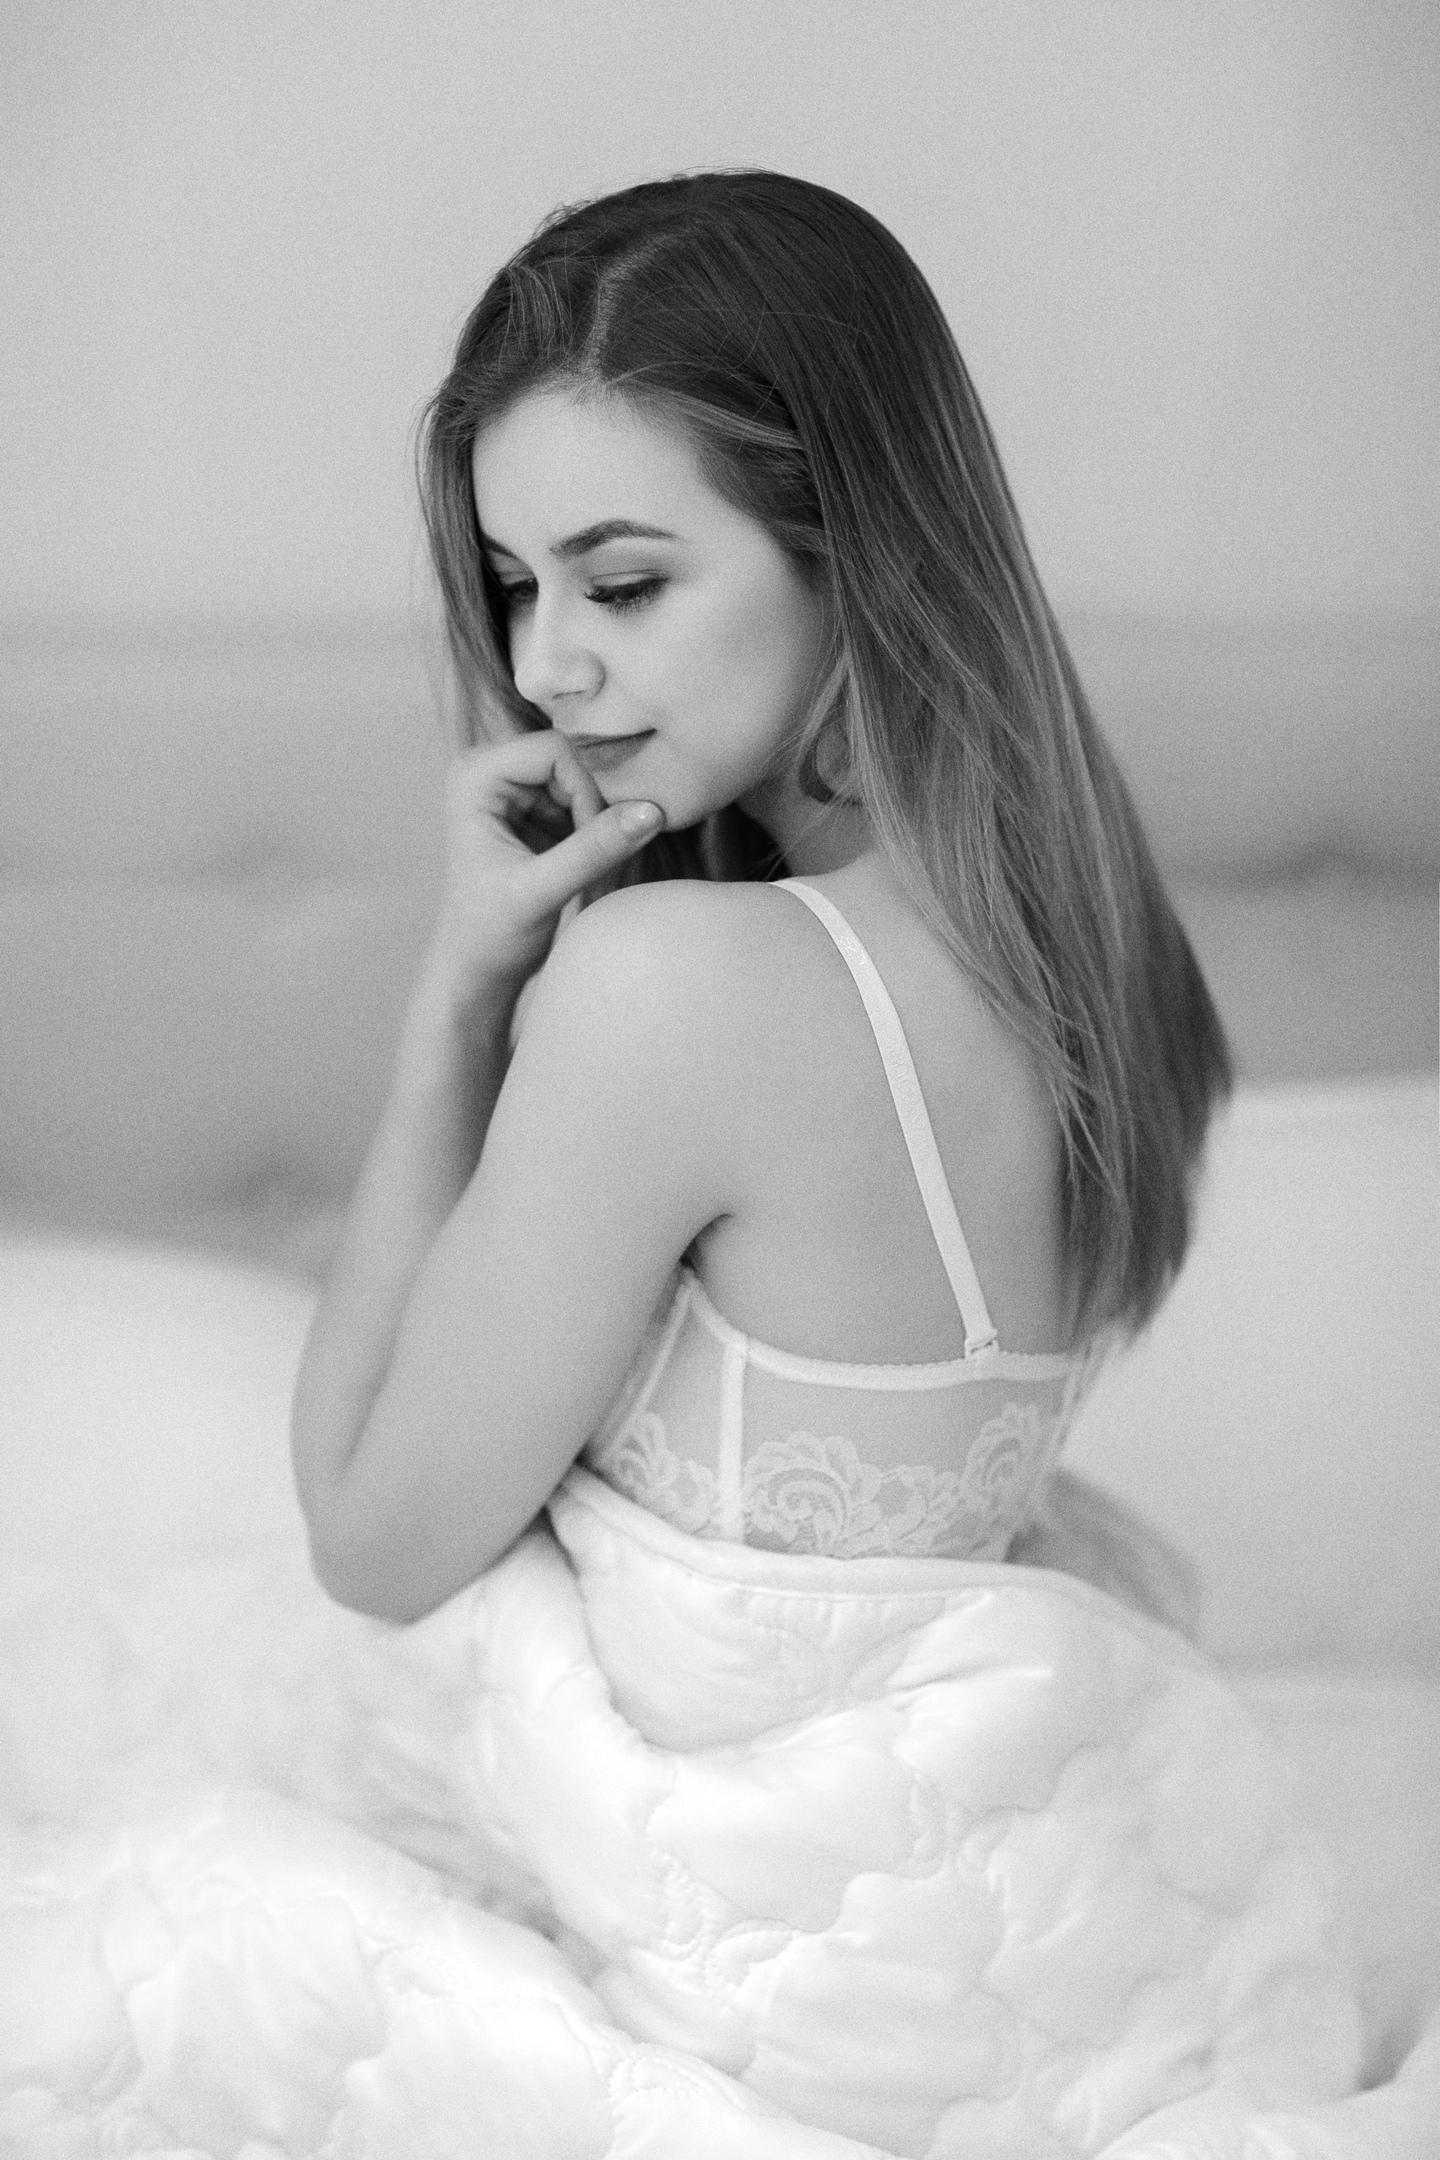 Murat Kuzhakhmetov Monochrome Women Portrait Model In Bedroom Touching Face 1440x2160